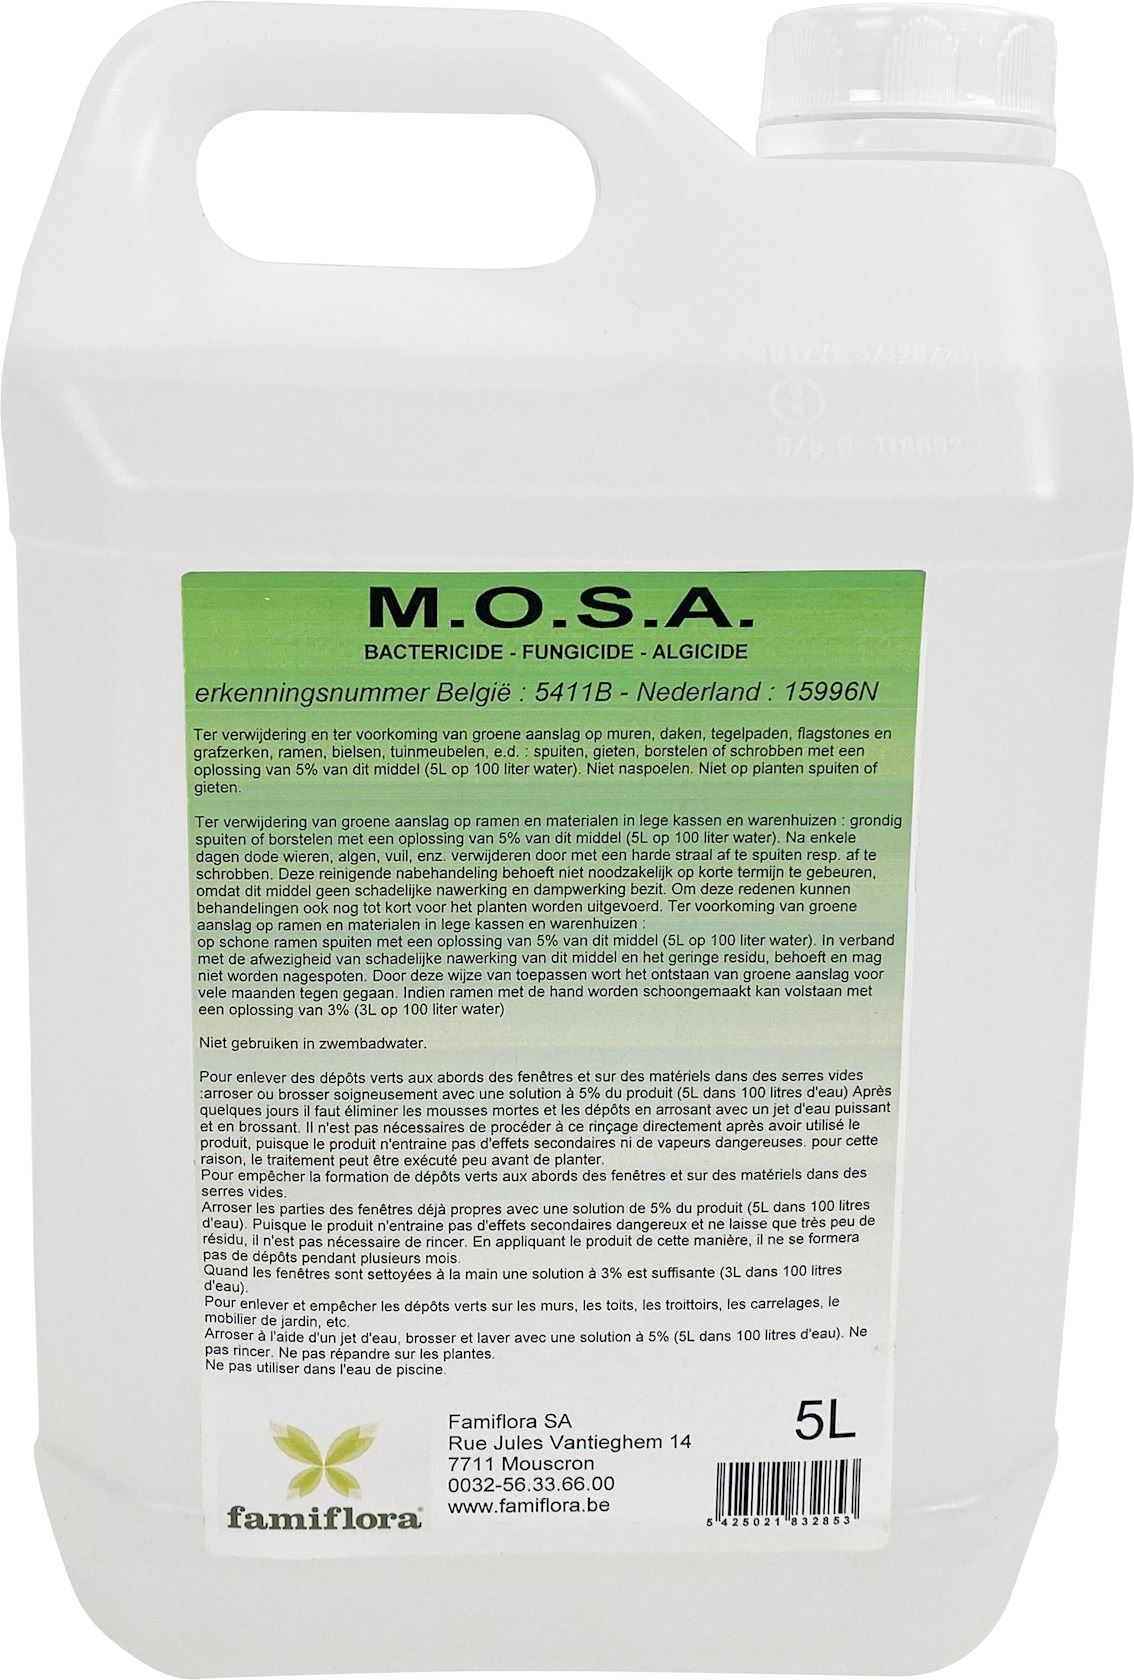 MOSA-ontmosser-groene-aanslagreiniger-5-liter